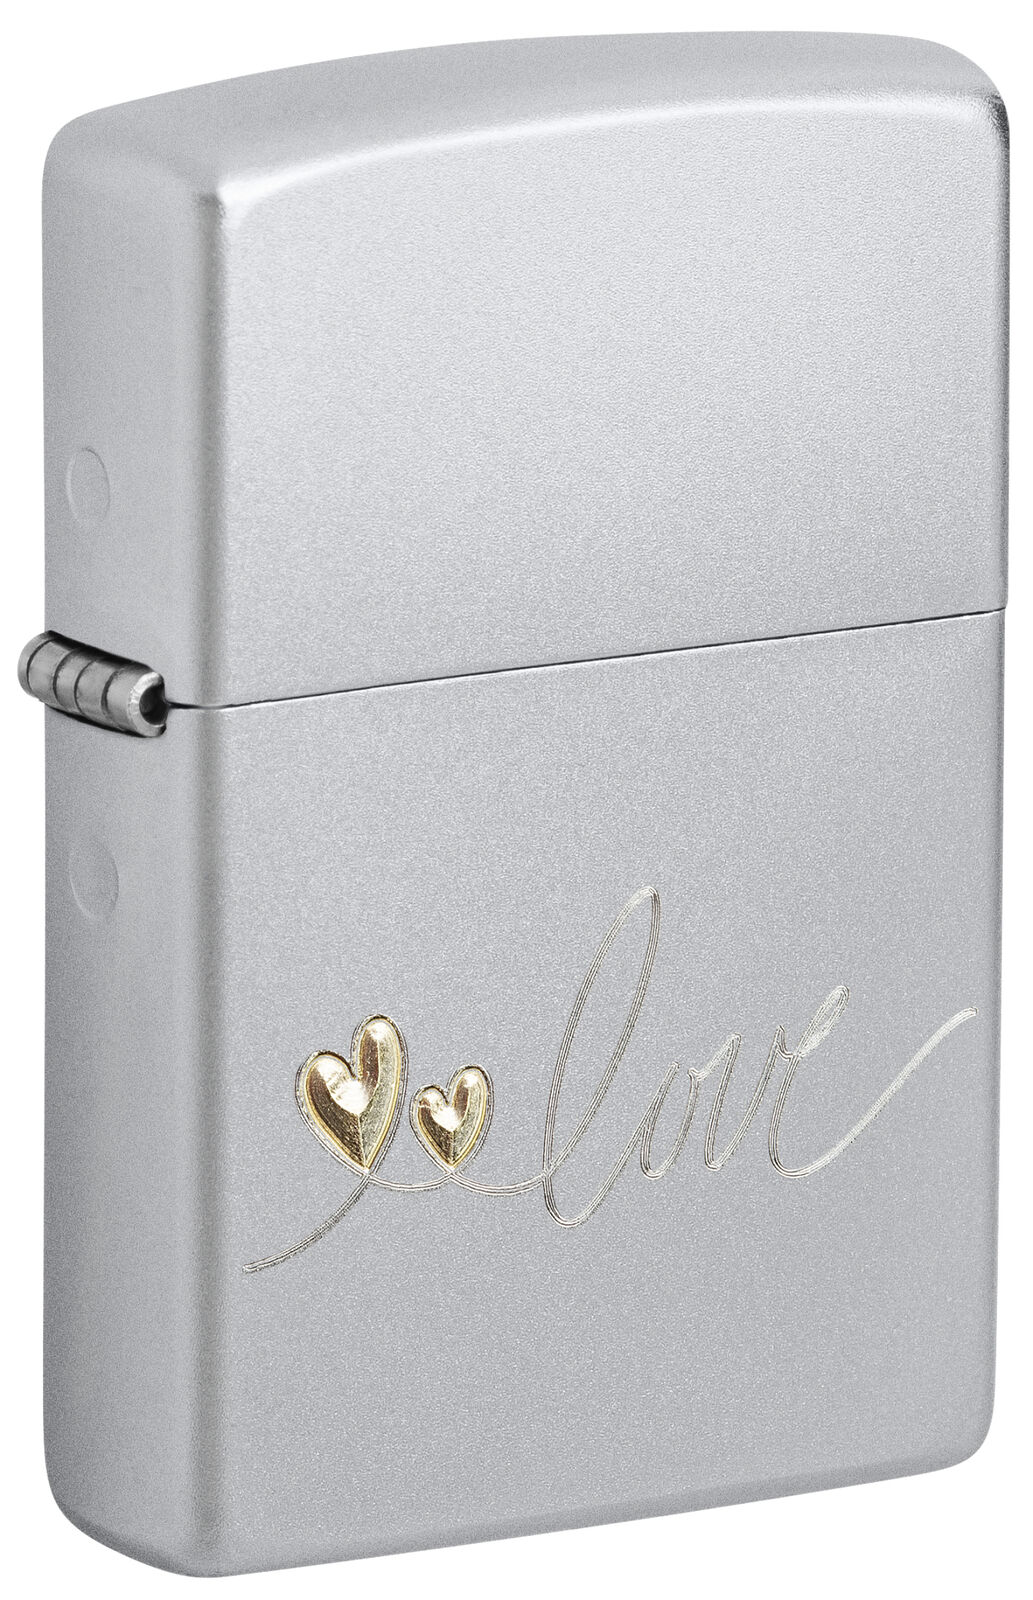 Zippo Love Design Satin Chrome Windproof Lighter, 48725